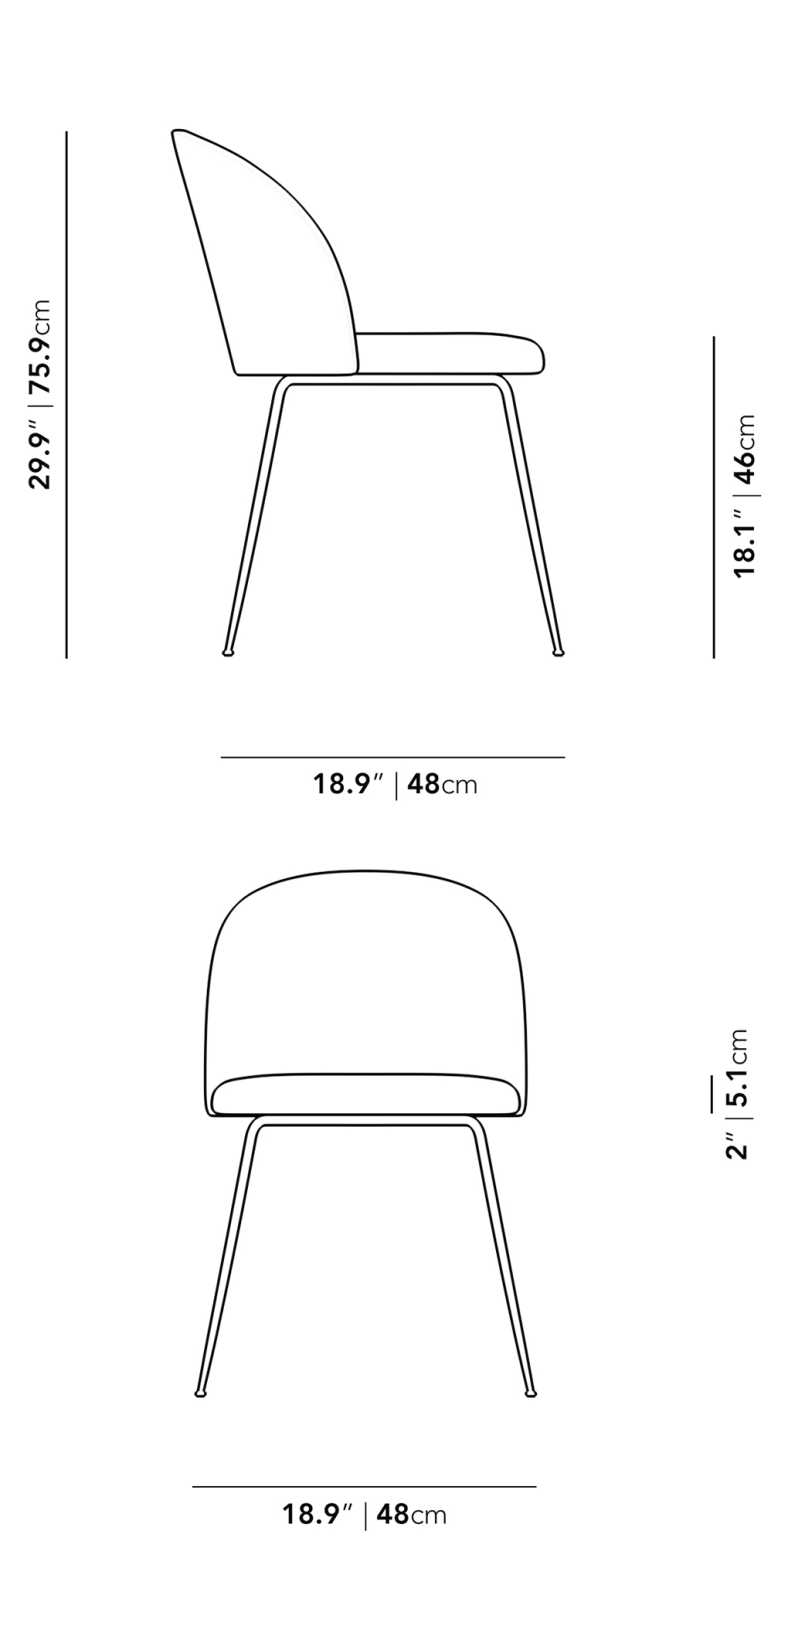 Dimensions for Iris Chair